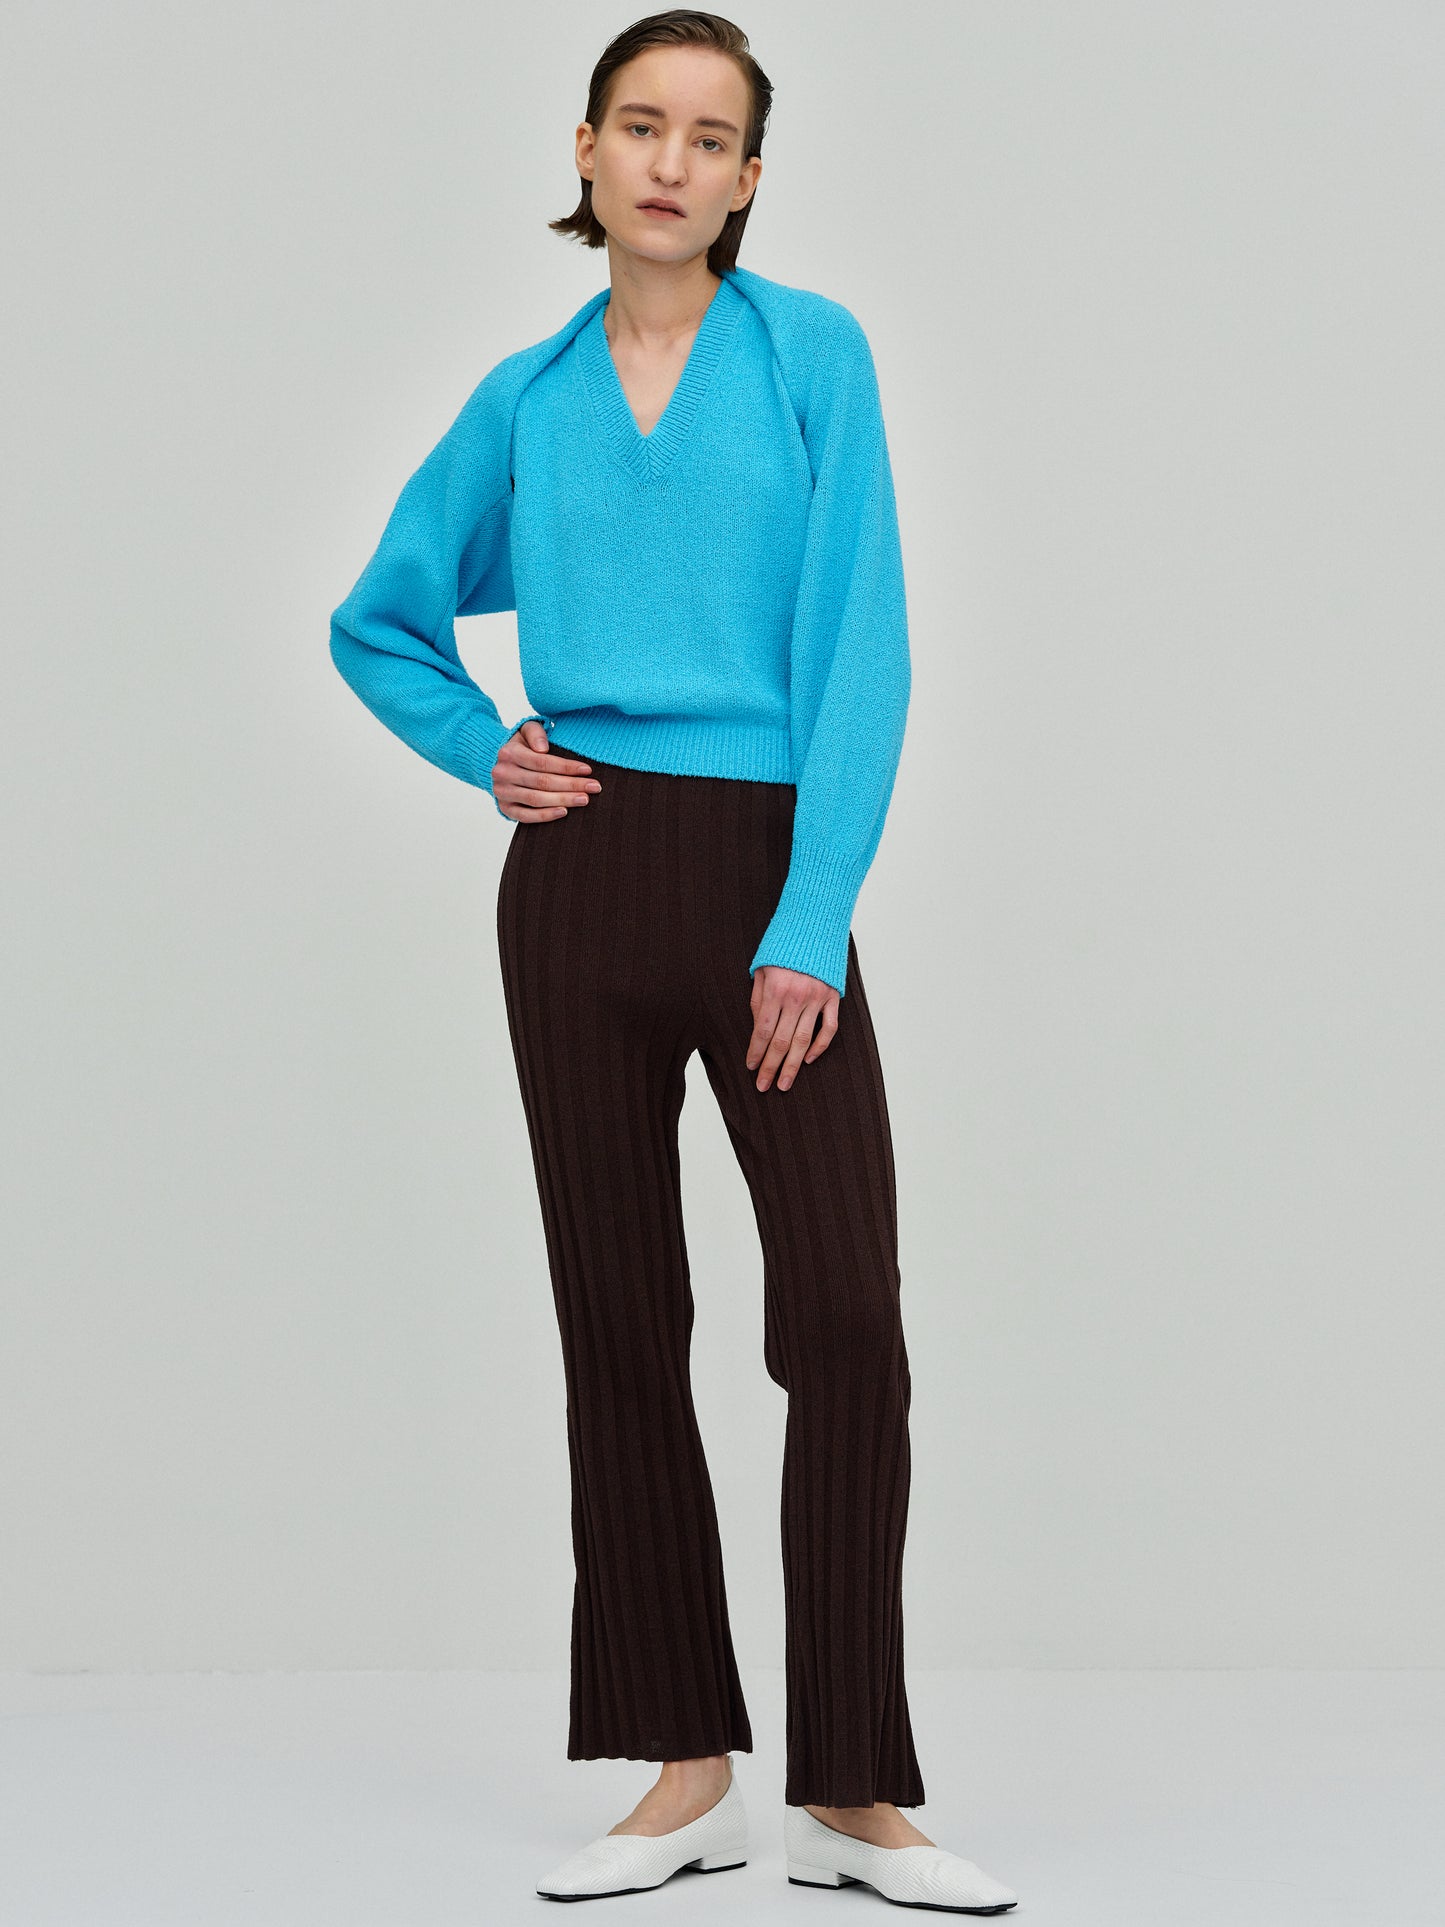 Bouclé Knit Vest + Shrug Set, Turquoise#N# #N# #N# – SourceUnknown